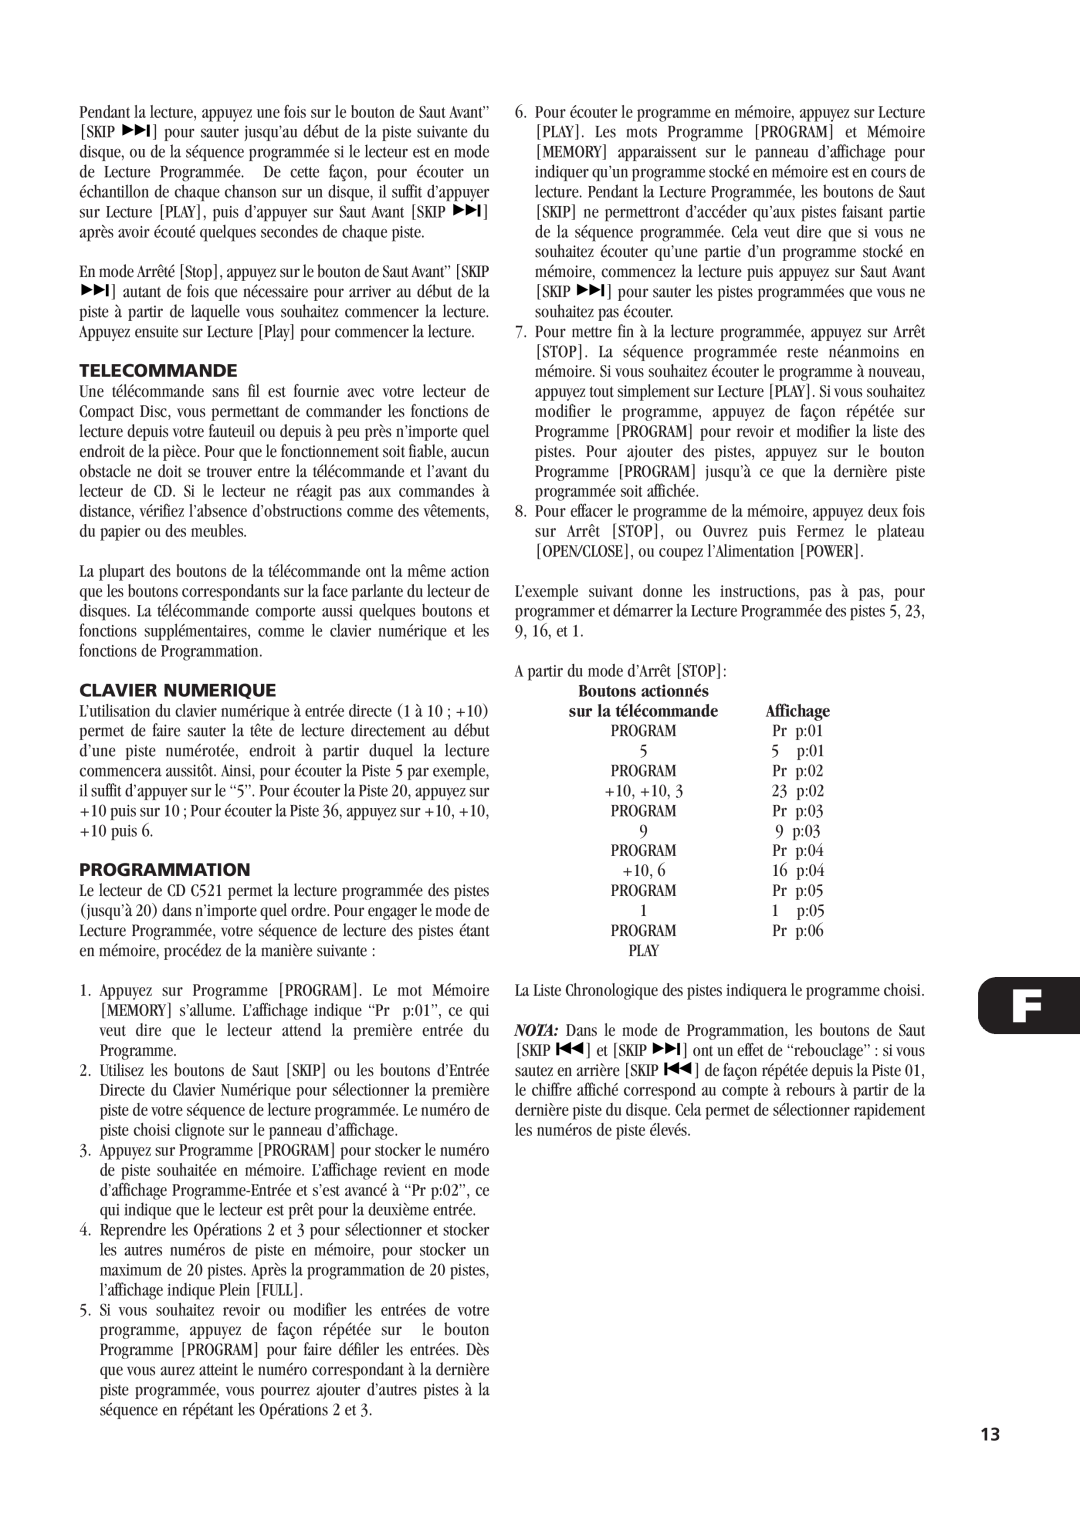 NAD C521 owner manual Telecommande, Clavier Numerique, Programmation 